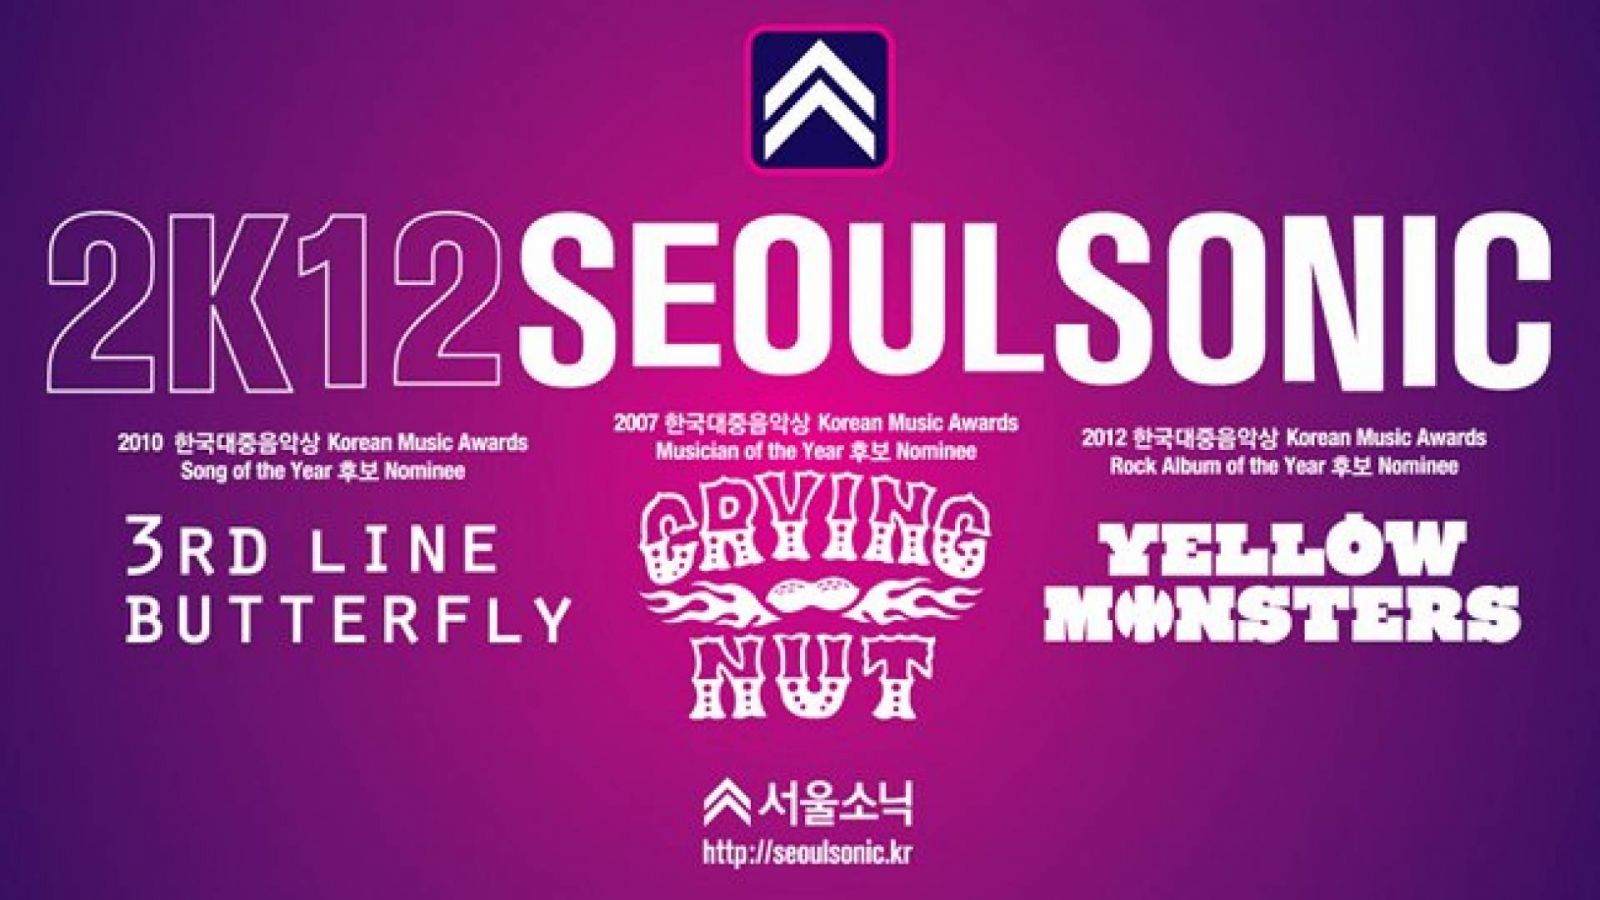 SEOULSONIC 2K12 Tour Details © DFSB Kollective